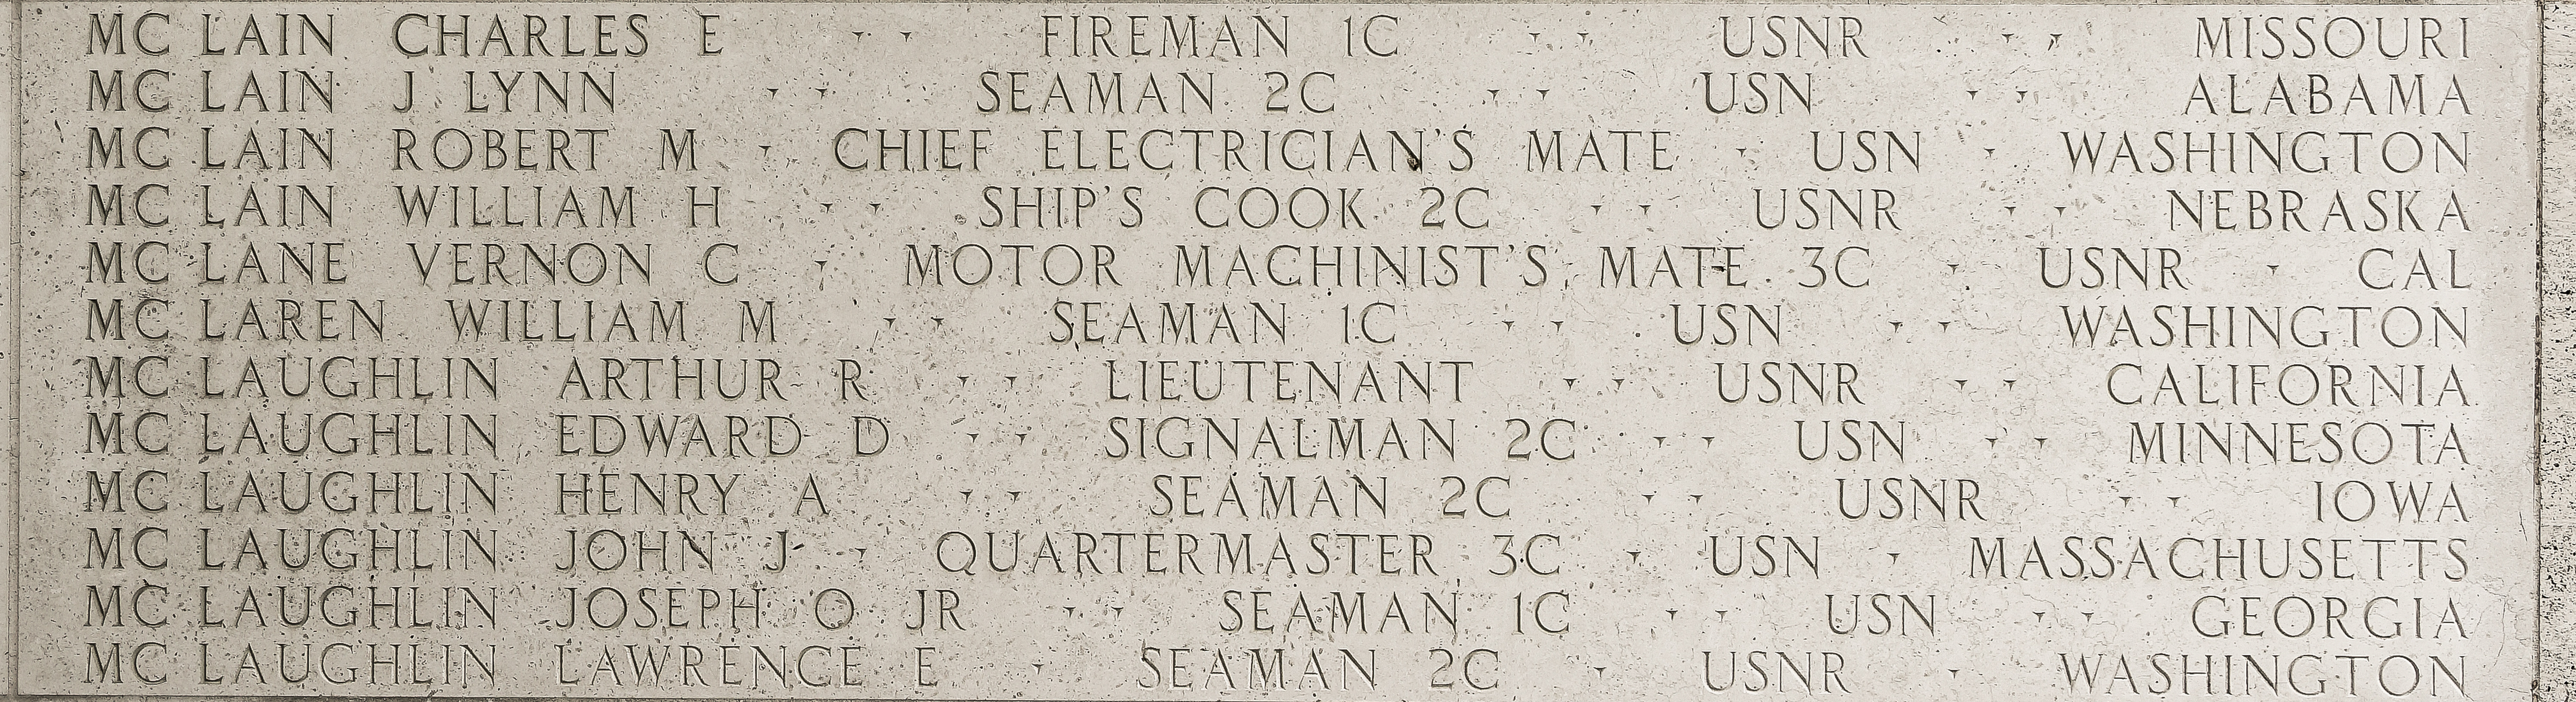 Vernon C. McLane, Motor Machinist's Mate Third Class